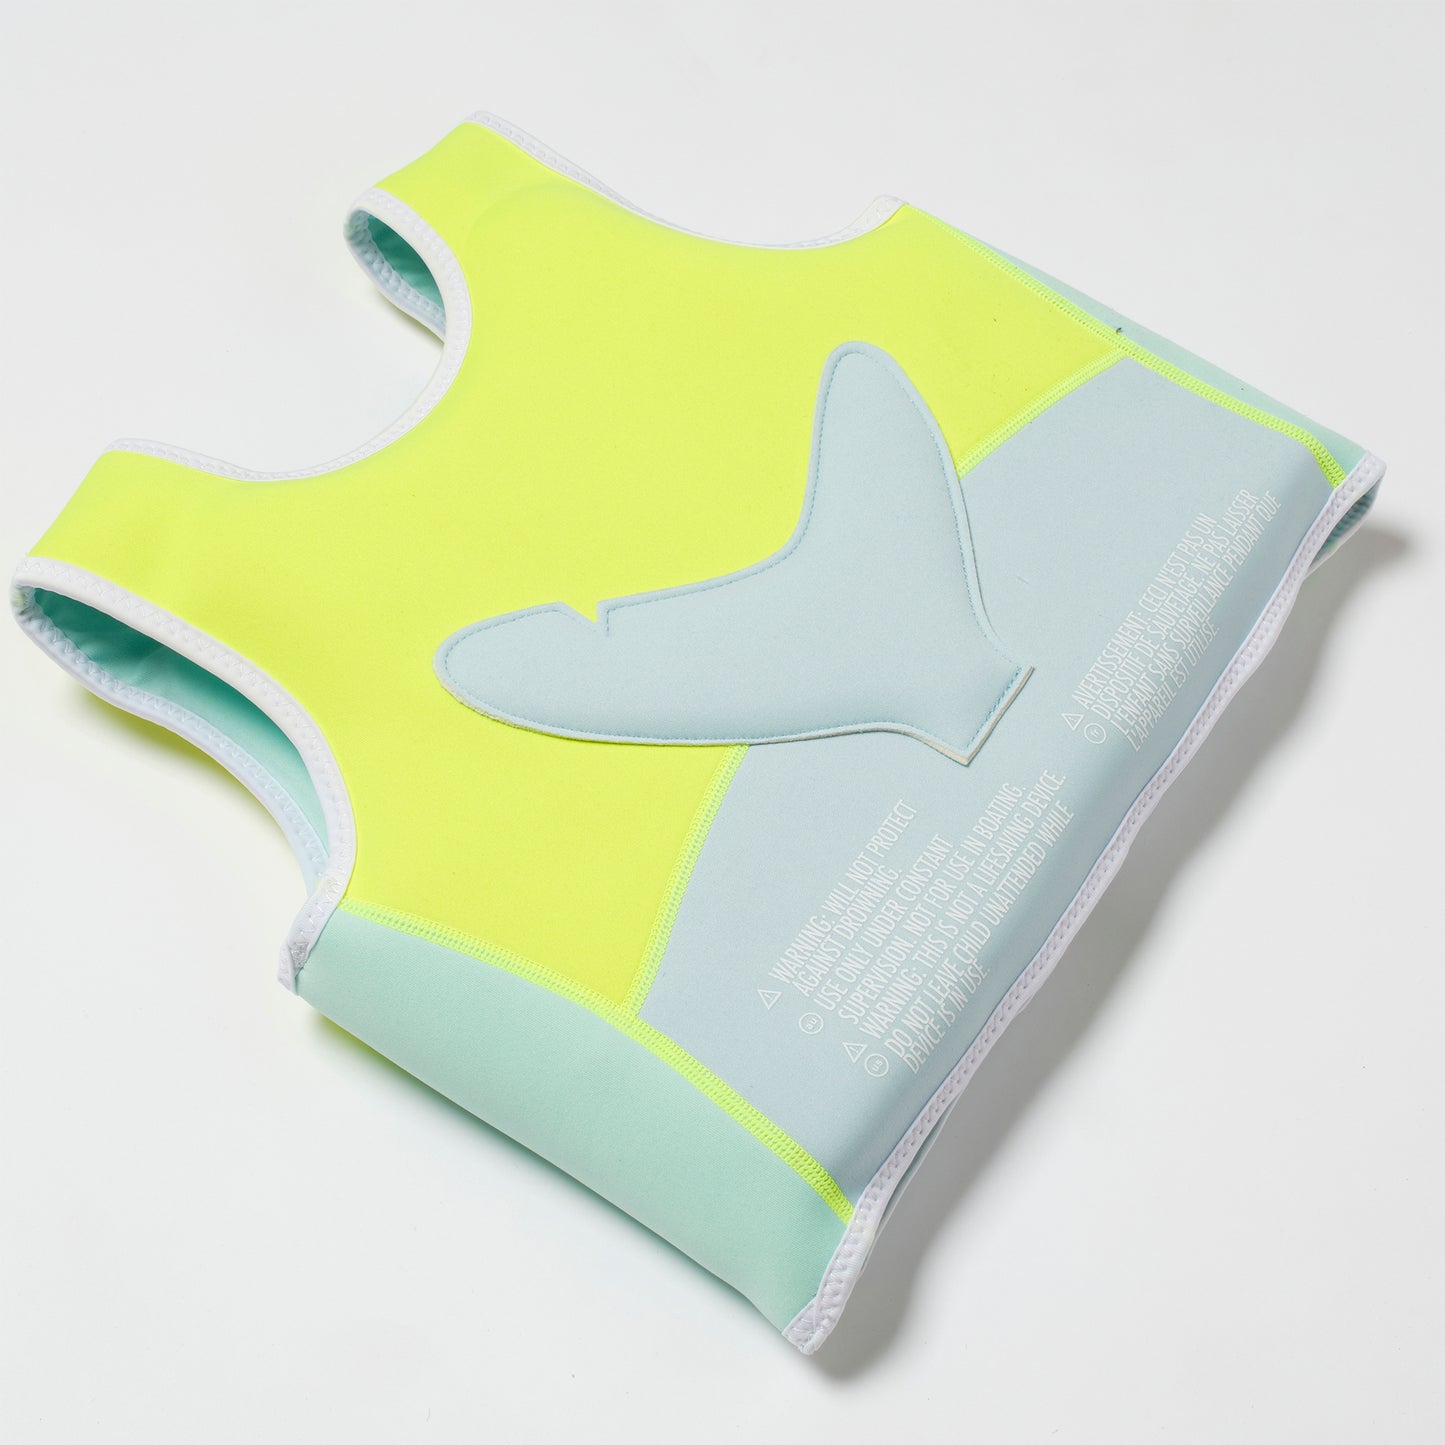 Salty the Shark Swim Vest Aqua Neon Yellow